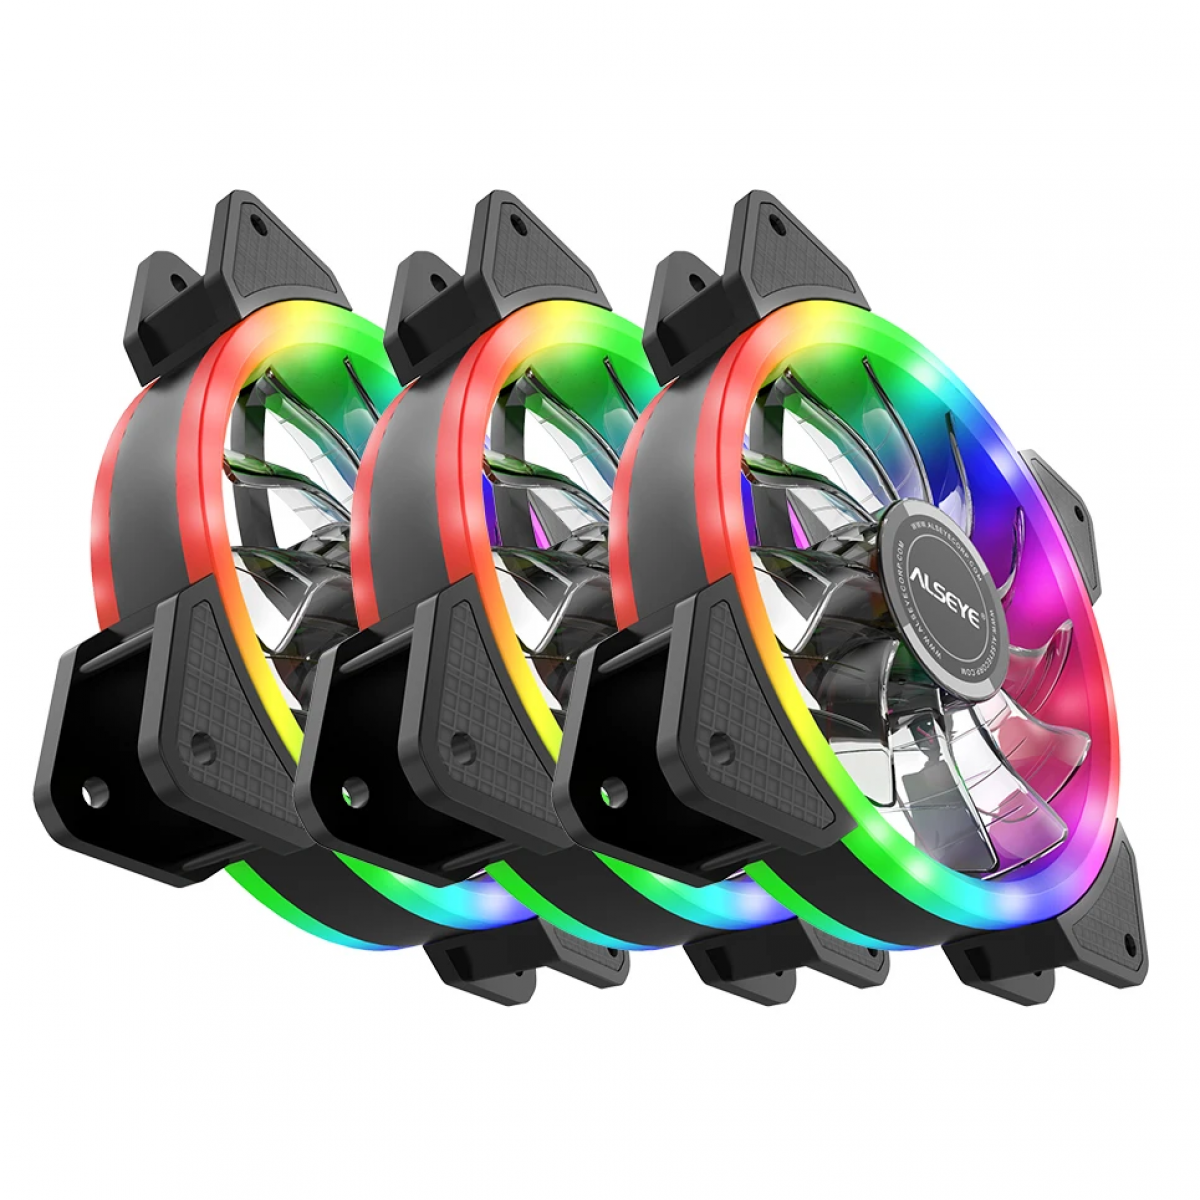 Kit Fan com 3 Unidades Alseye D-Ringer, RGB, 120mm